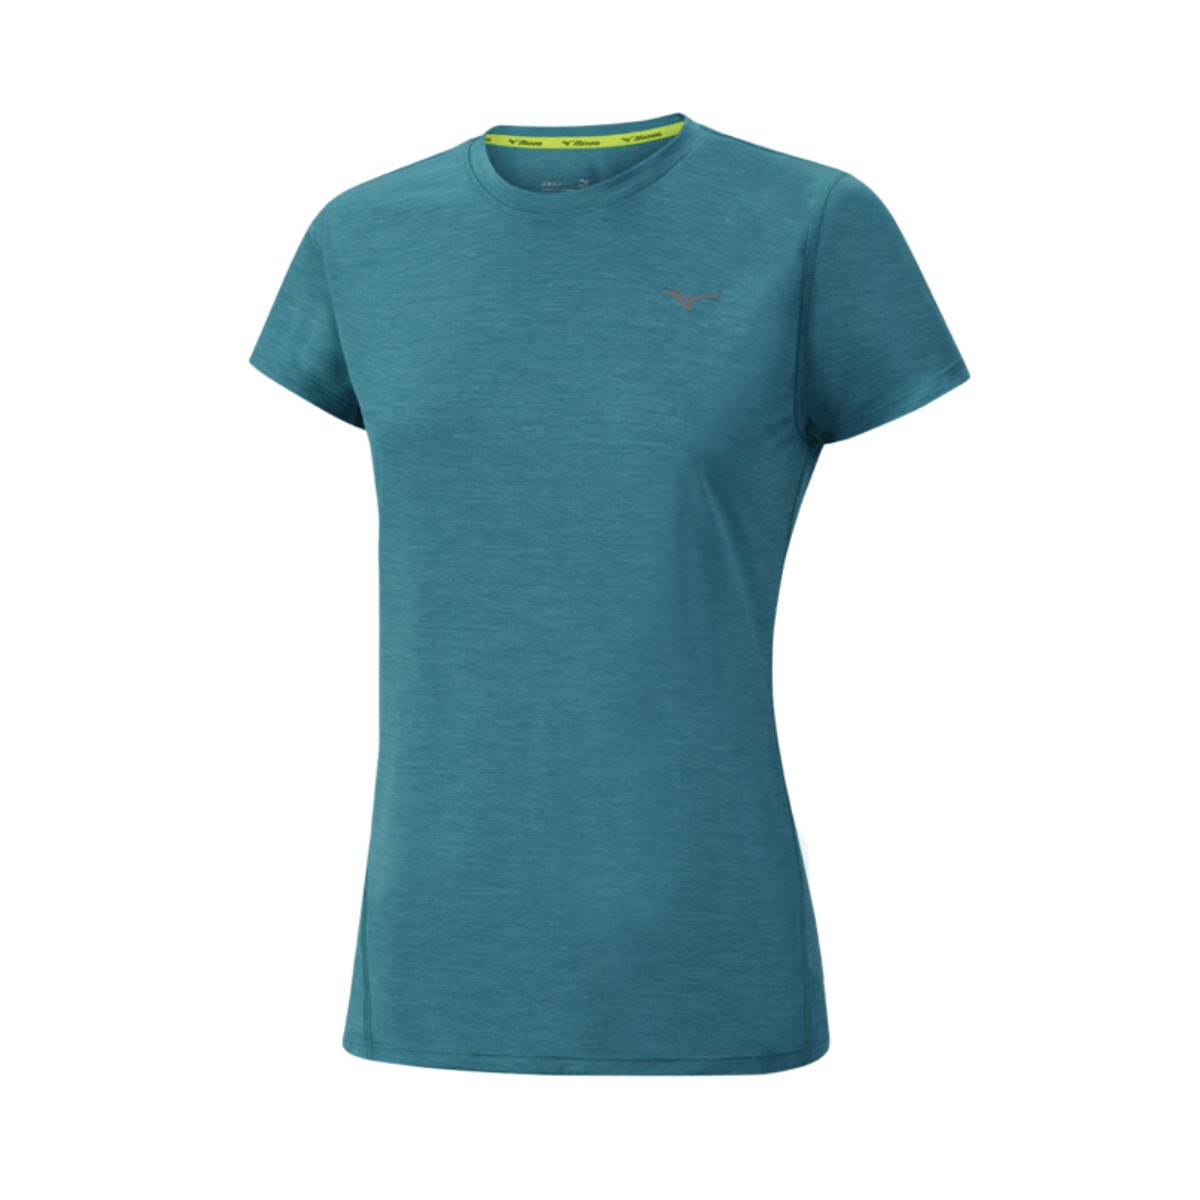 Mizuno Impulse Core Tee Running Women's Short Sleeve T-Shirt, Size L